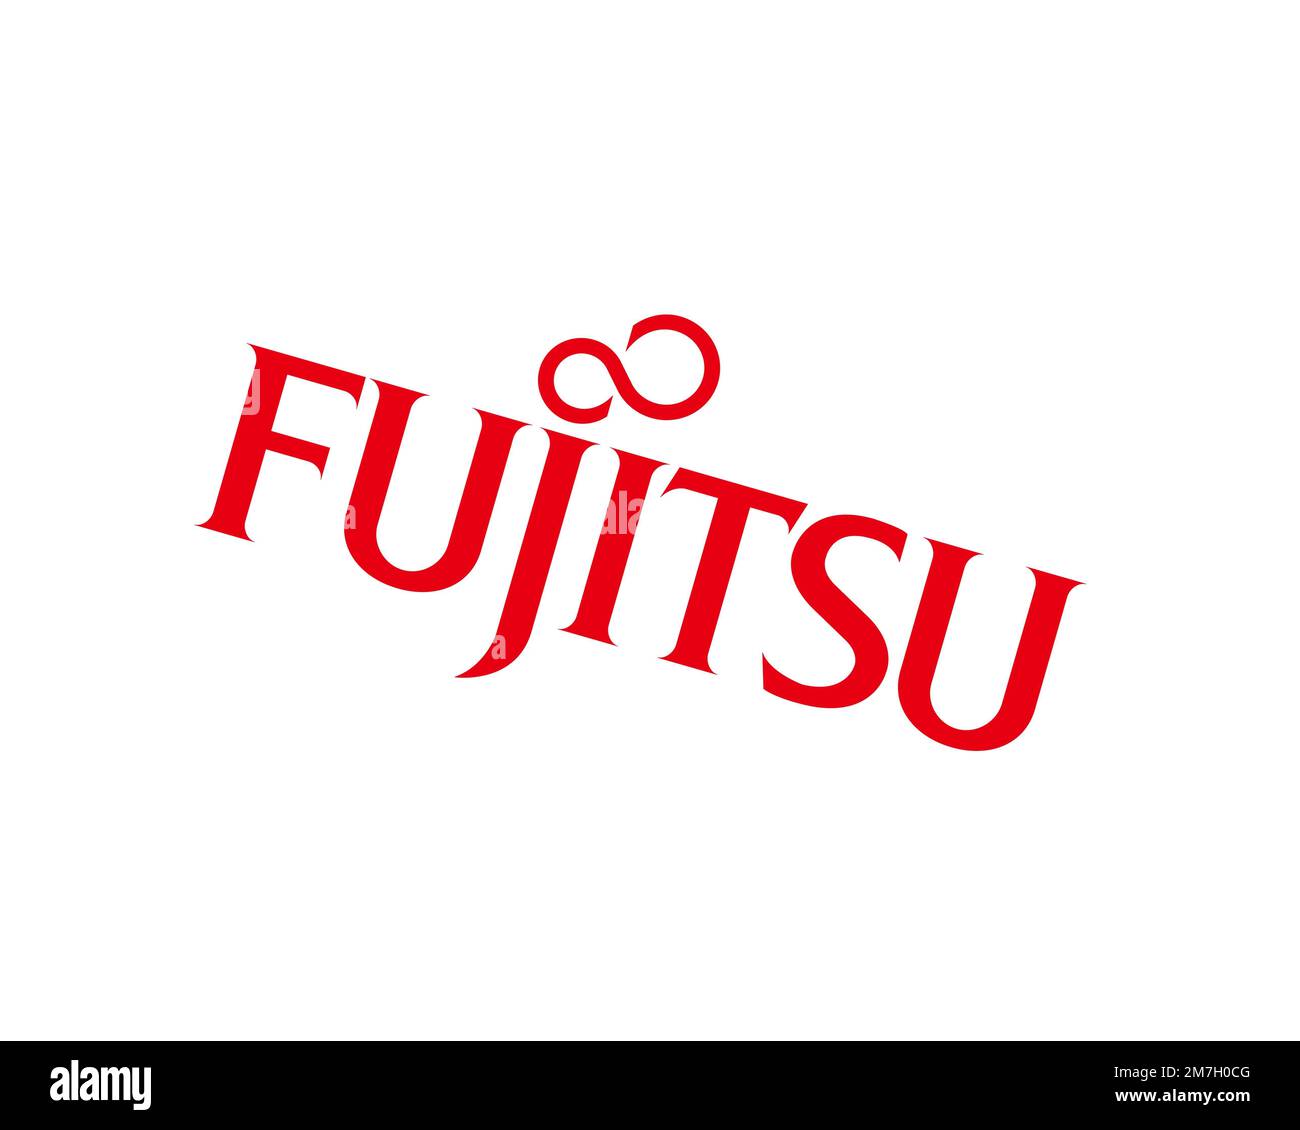 Fujitsu, rotated logo, white background B Stock Photo